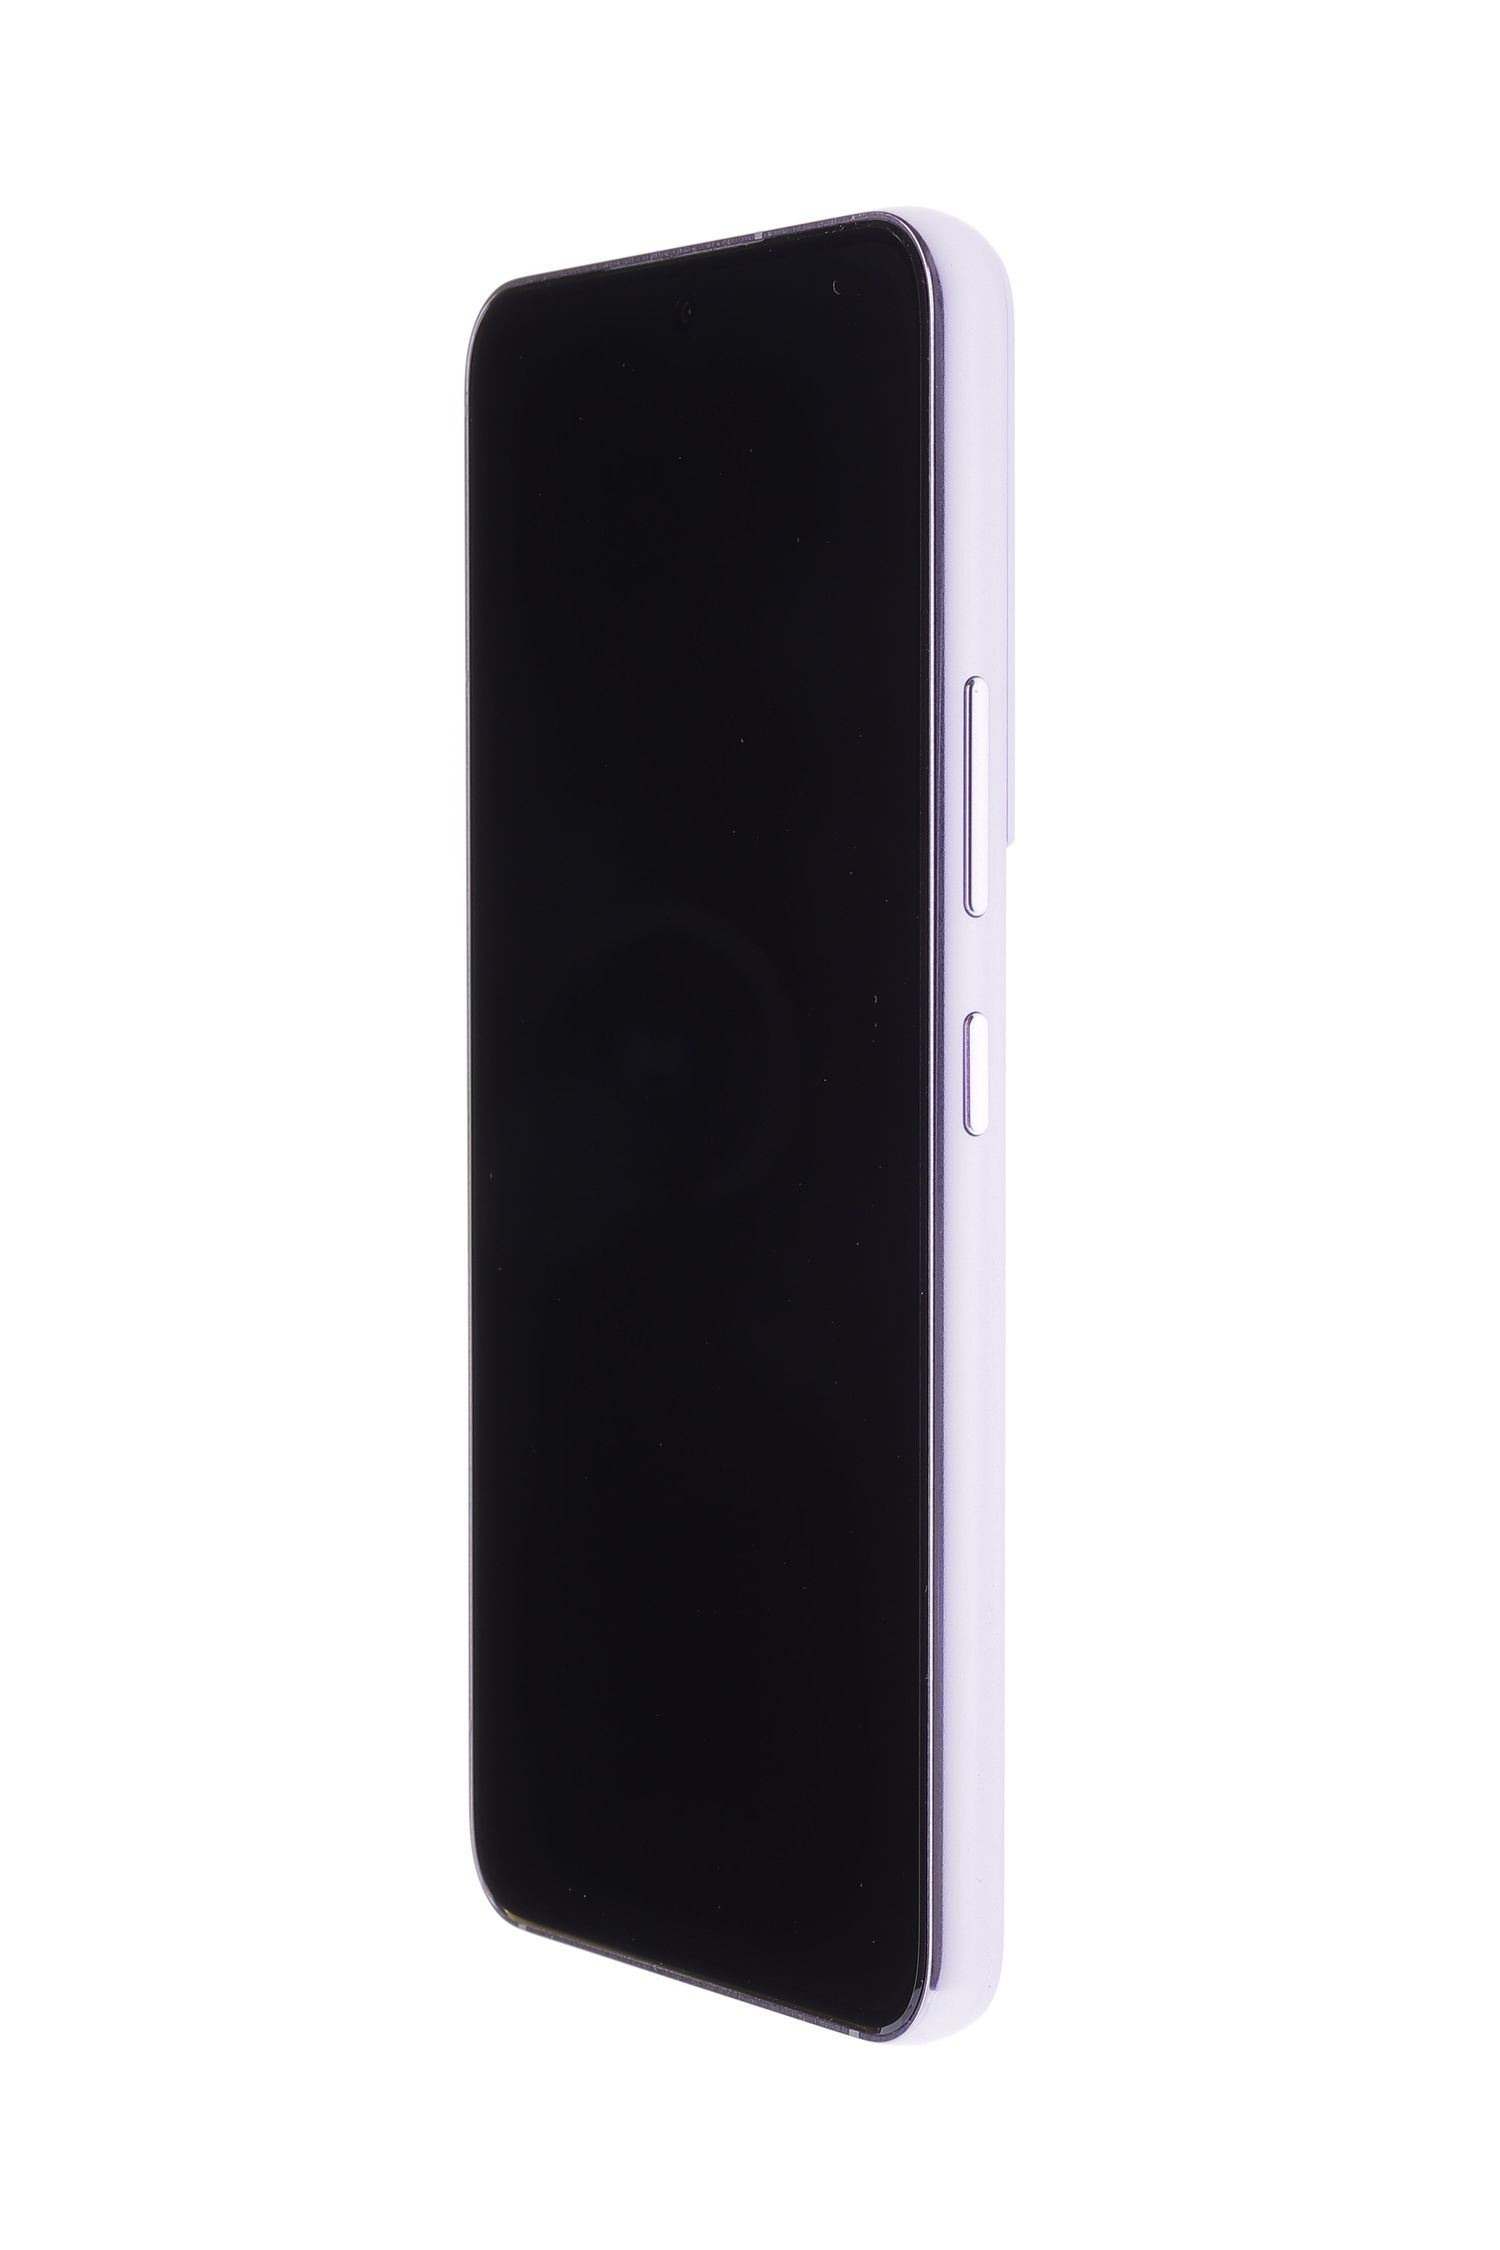 Mobiltelefon Samsung Galaxy S22 5G, Bora Purple, 128 GB, Foarte Bun